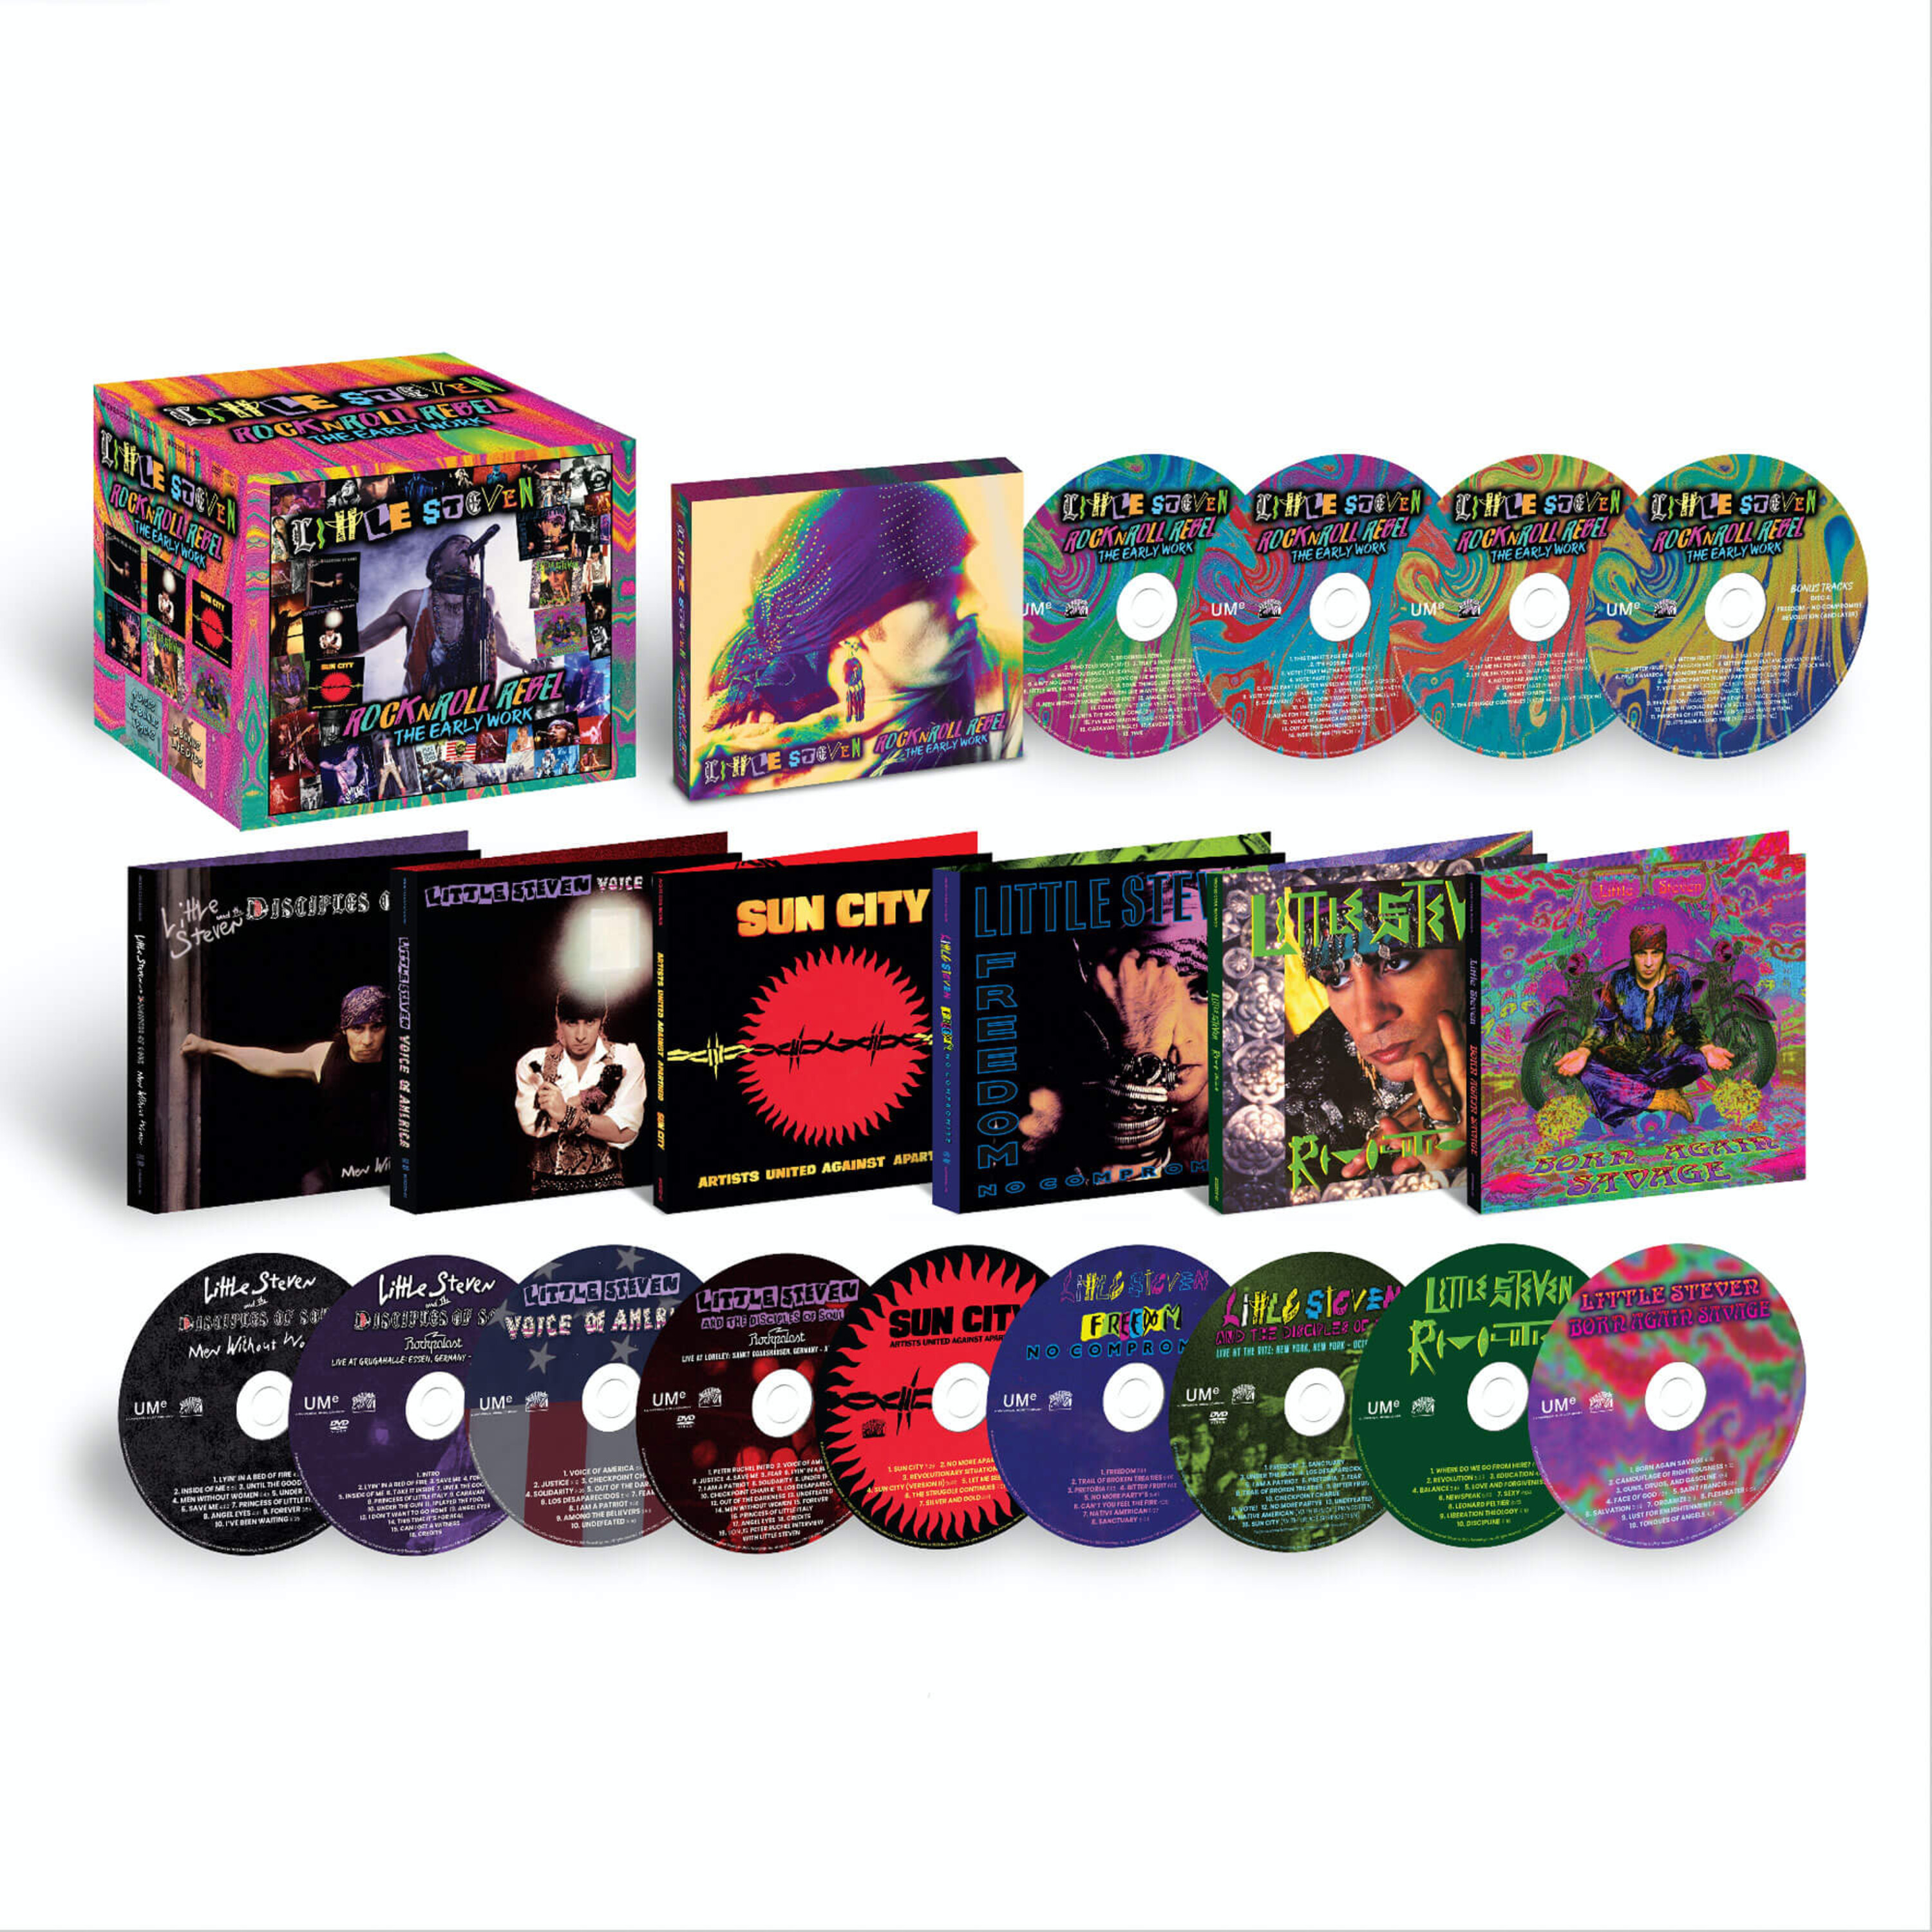 Bravado Rock N Roll Rebel The Early Work Career Boxset (Ltd. Edition  10CD/3DVD) Little Steven  The Disciples Of Soul Boxset